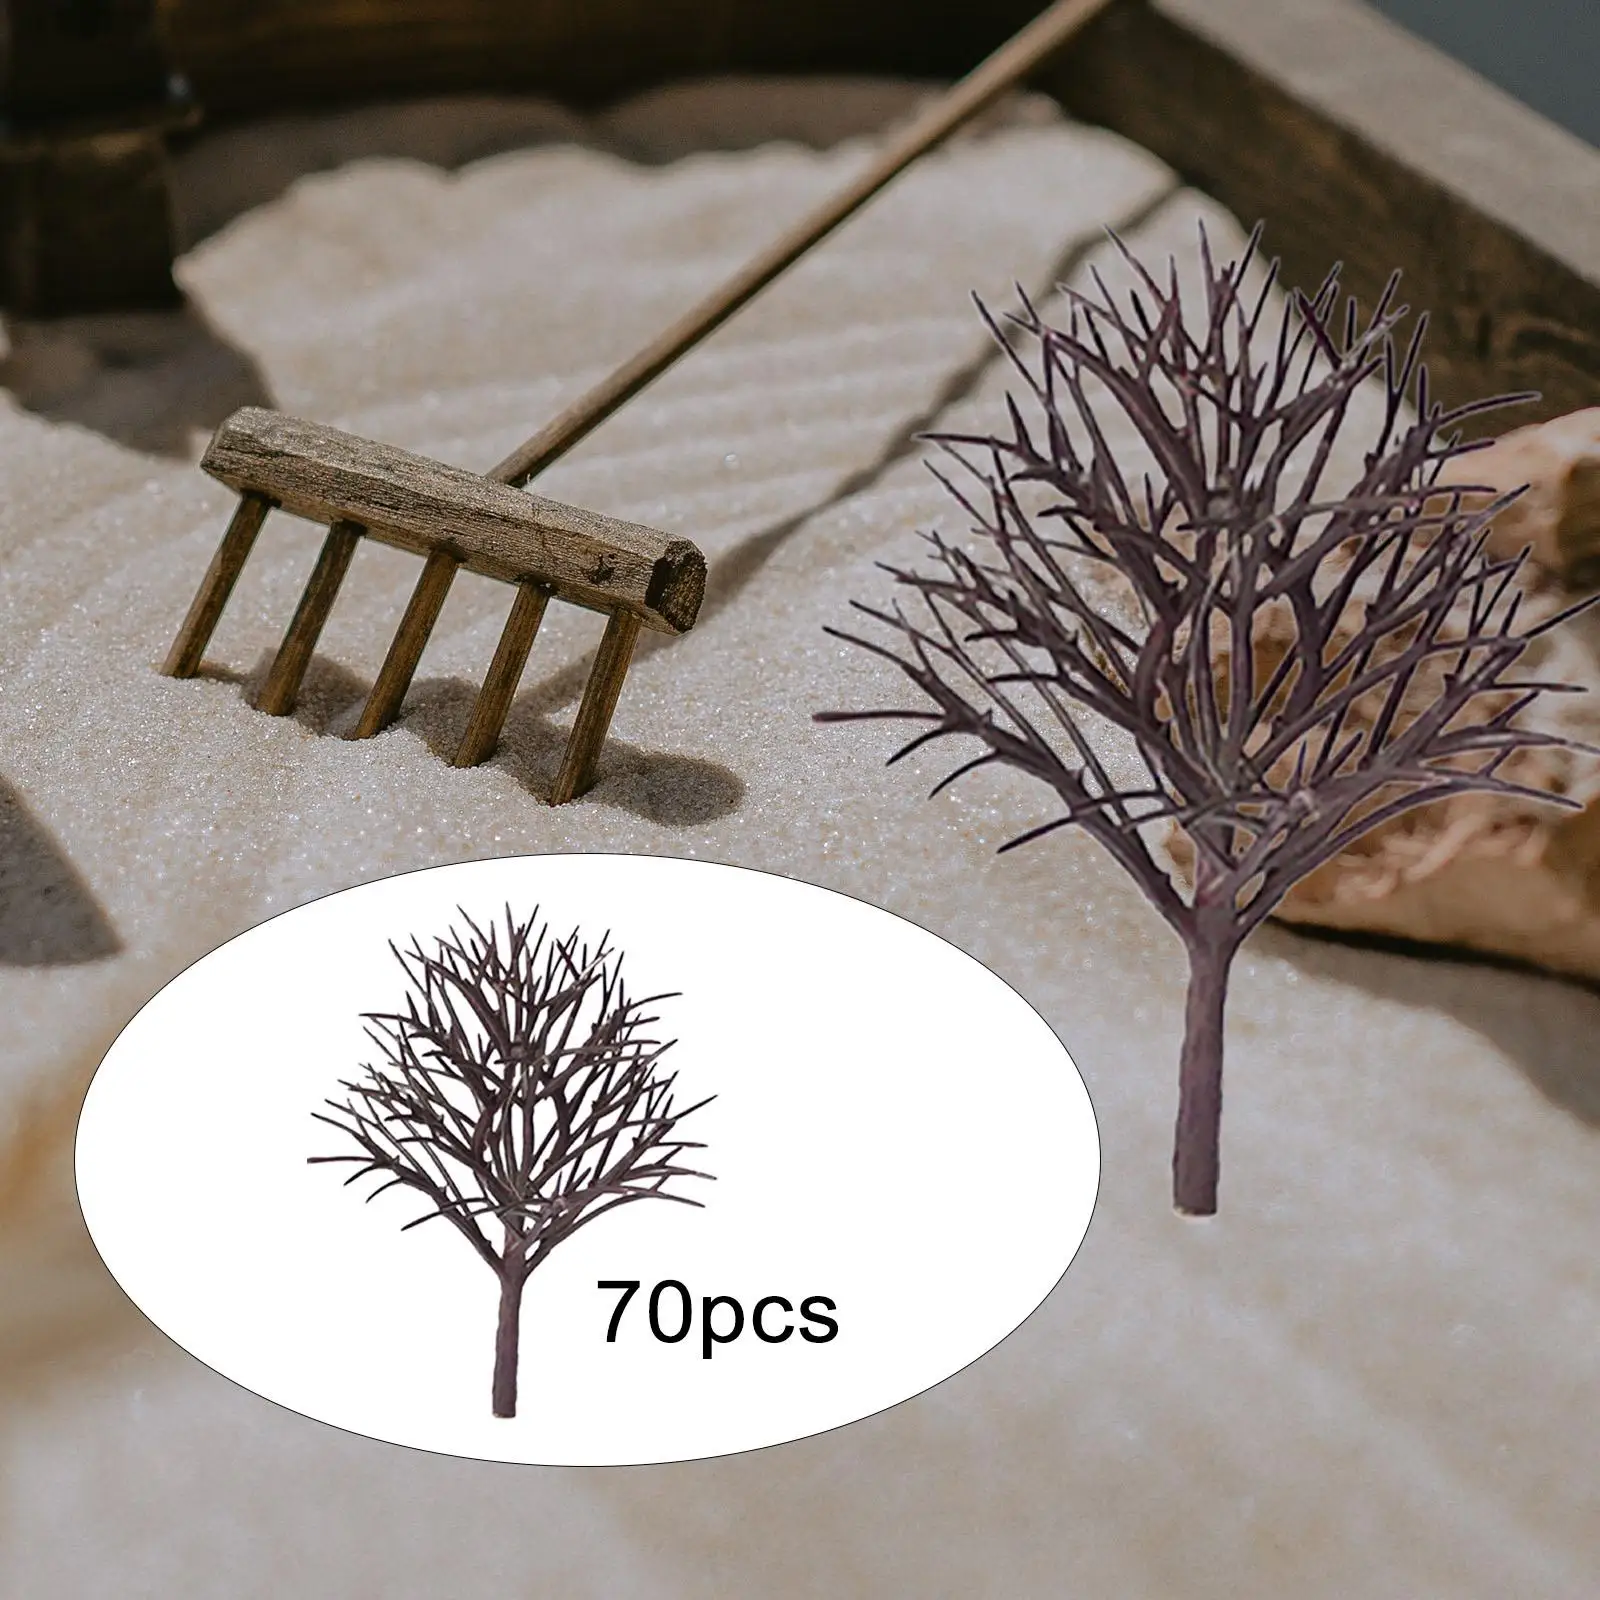 70Pcs Mini Model Trees 6cm Peach Tree Train Scenery Architecture Trees for Building Model Train Scene Layout Landscape Scenery